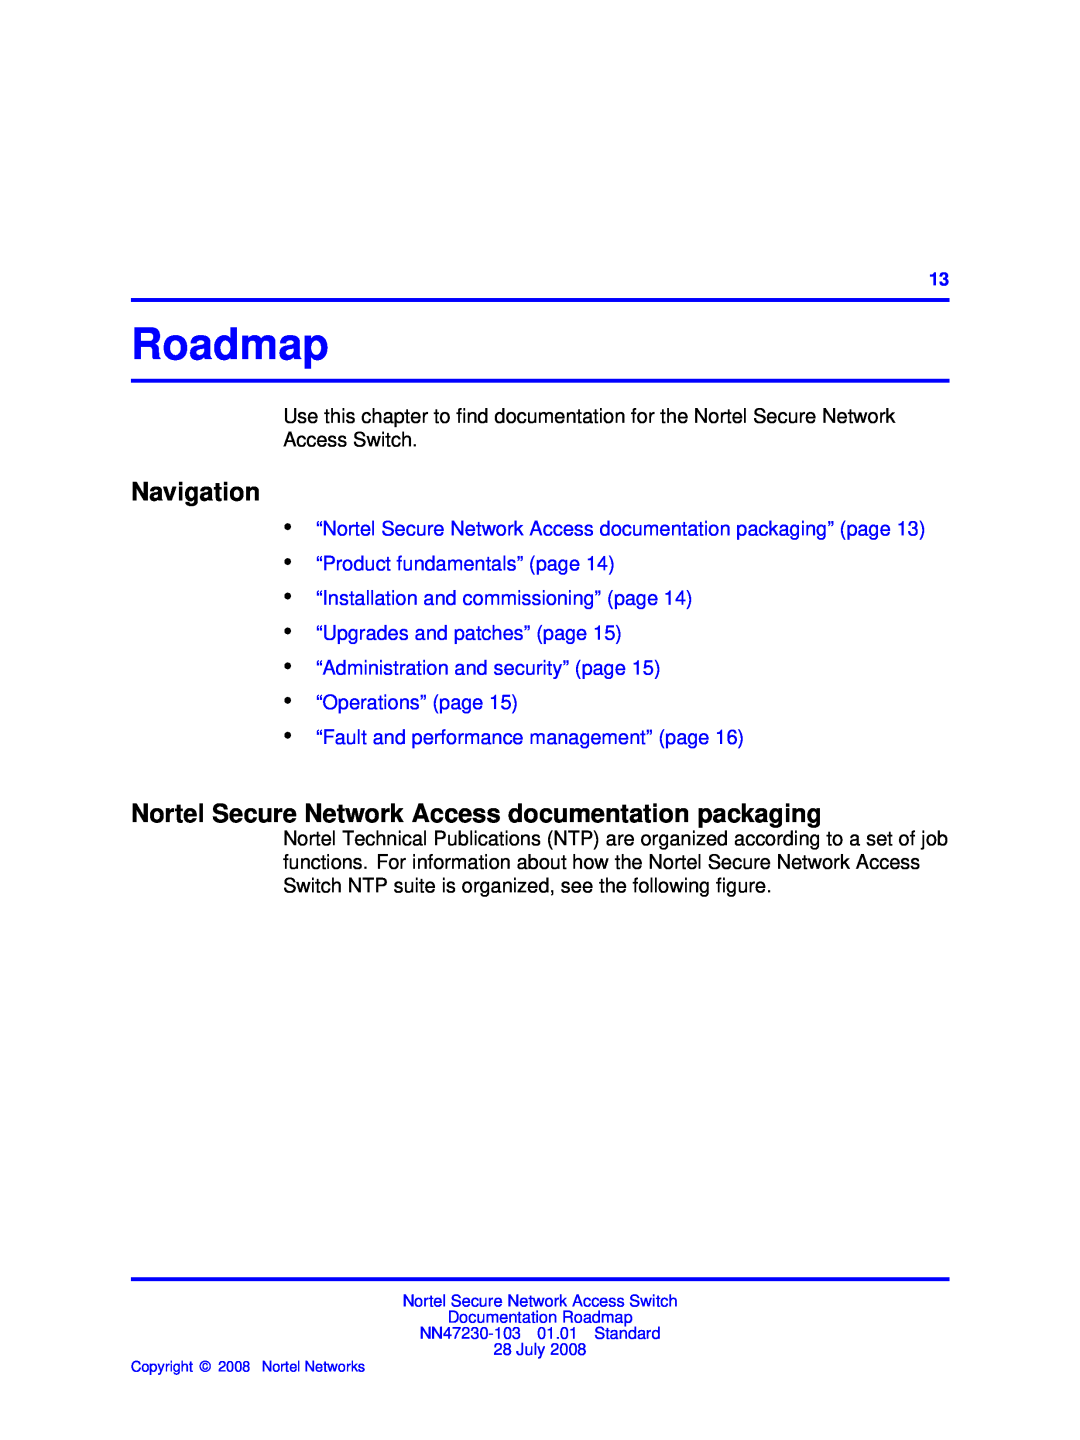 Nortel Networks NN47230-103 manual Roadmap, Nortel Secure Network Access documentation packaging, Navigation 